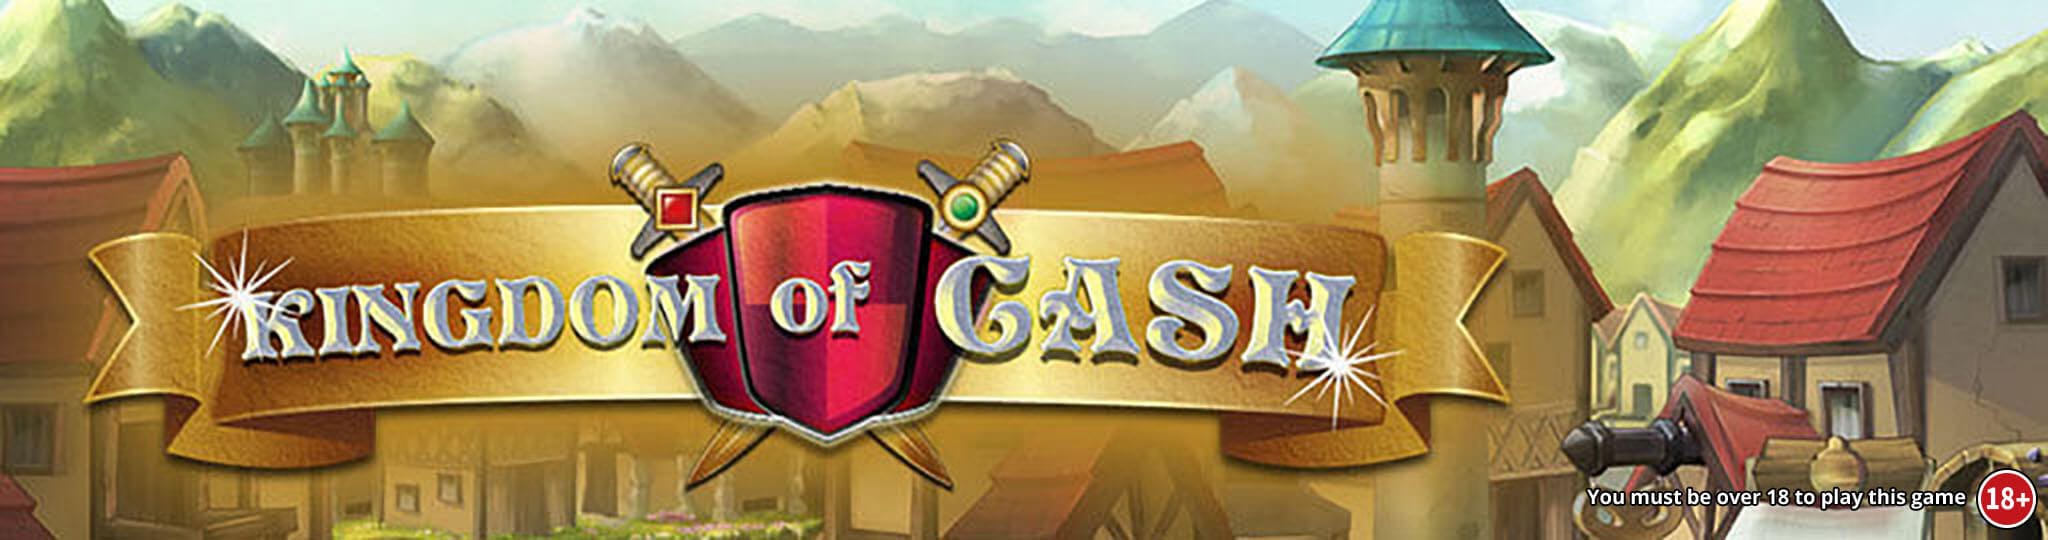 Kingdom of Cash Review